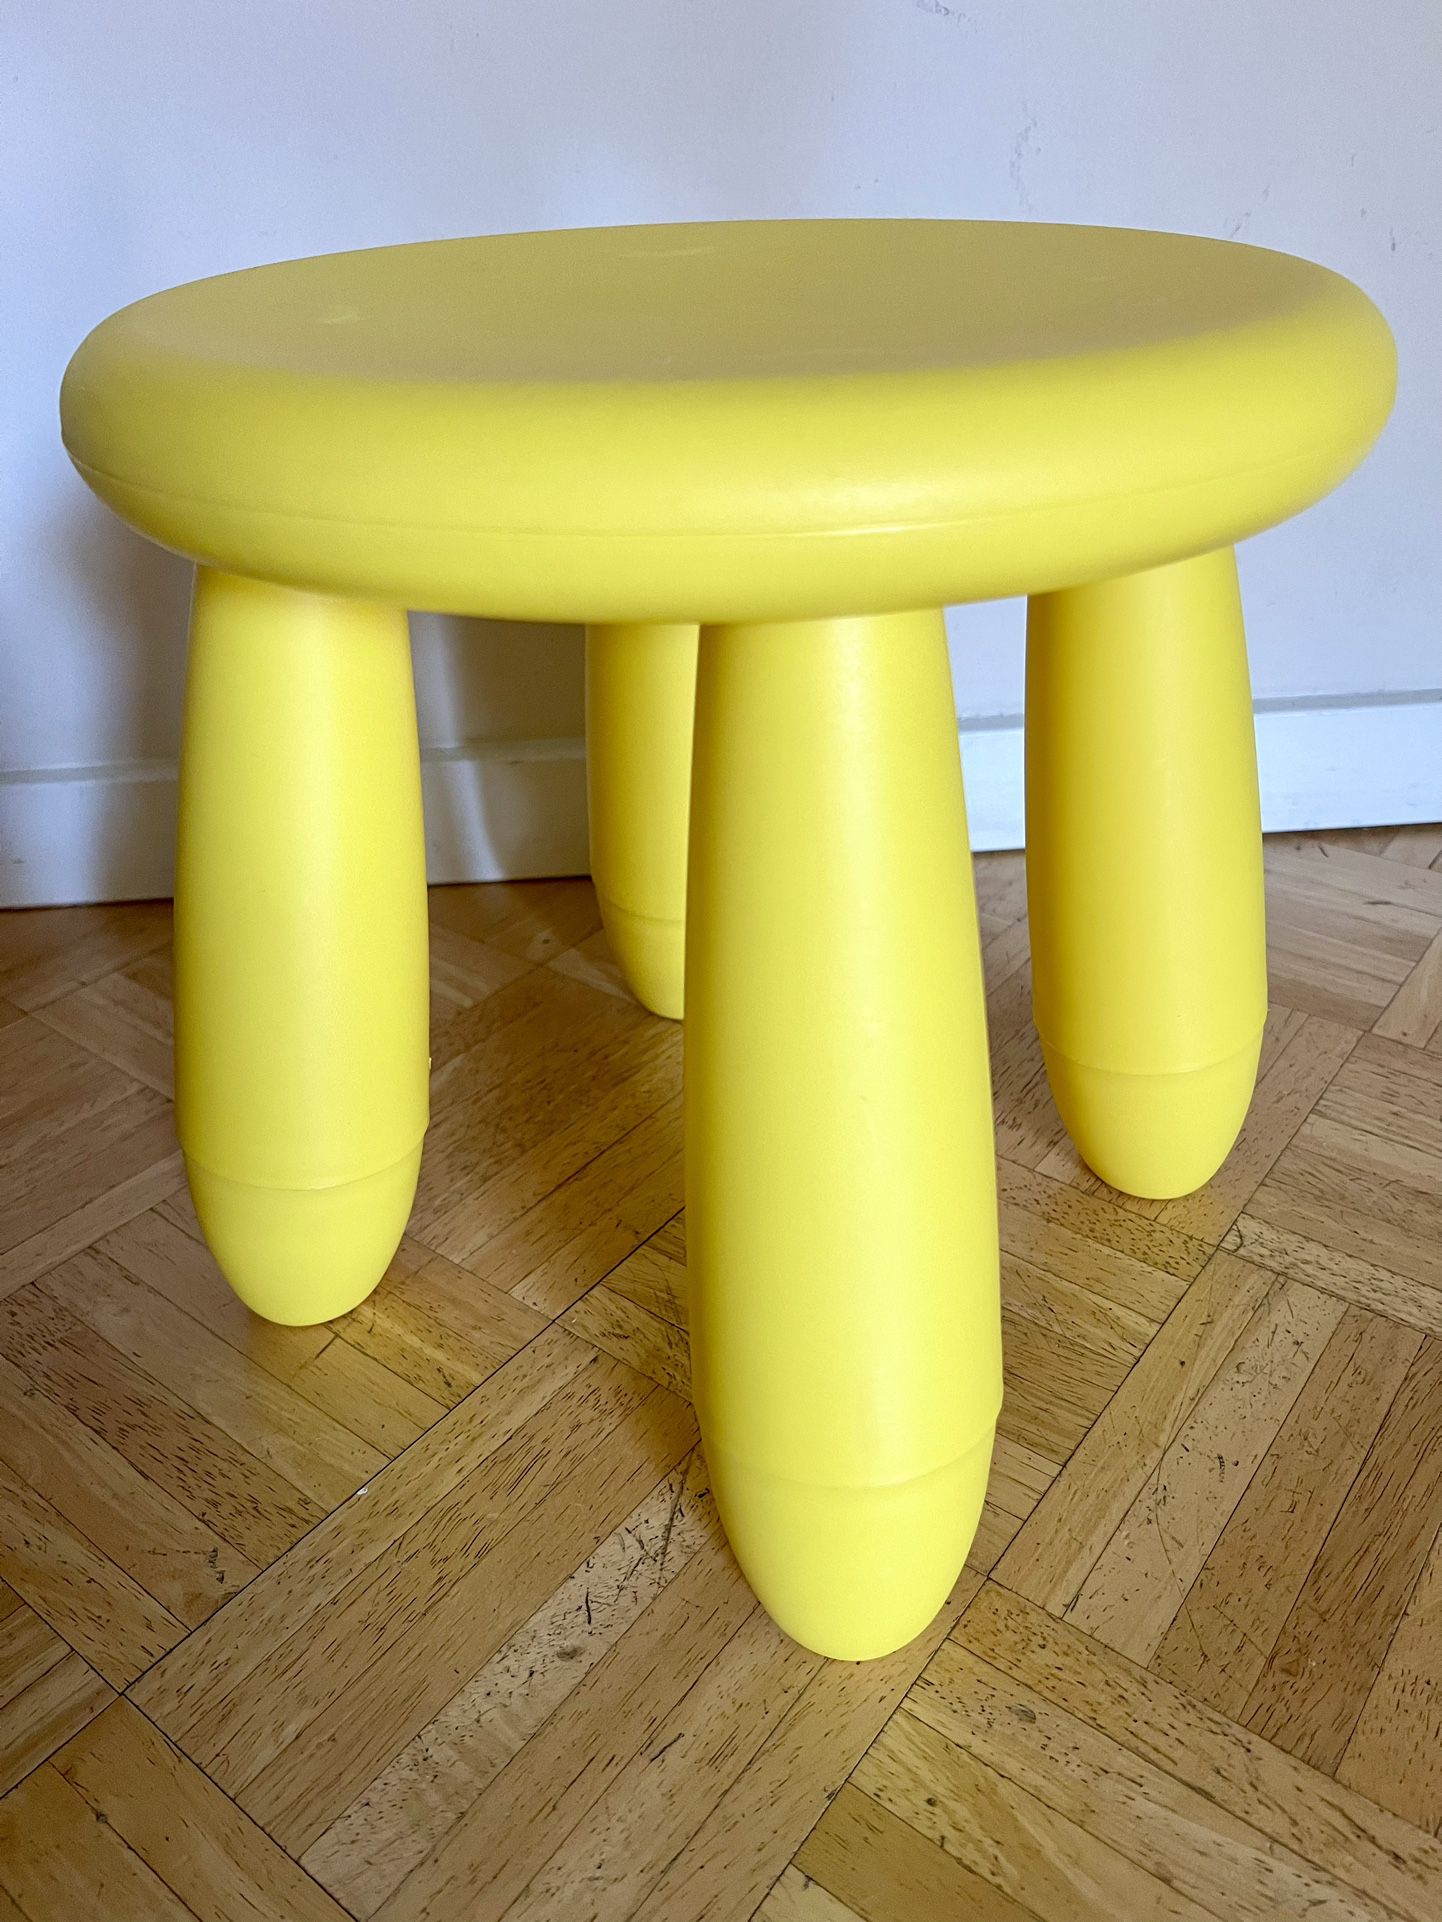 Ikea Kids Chair